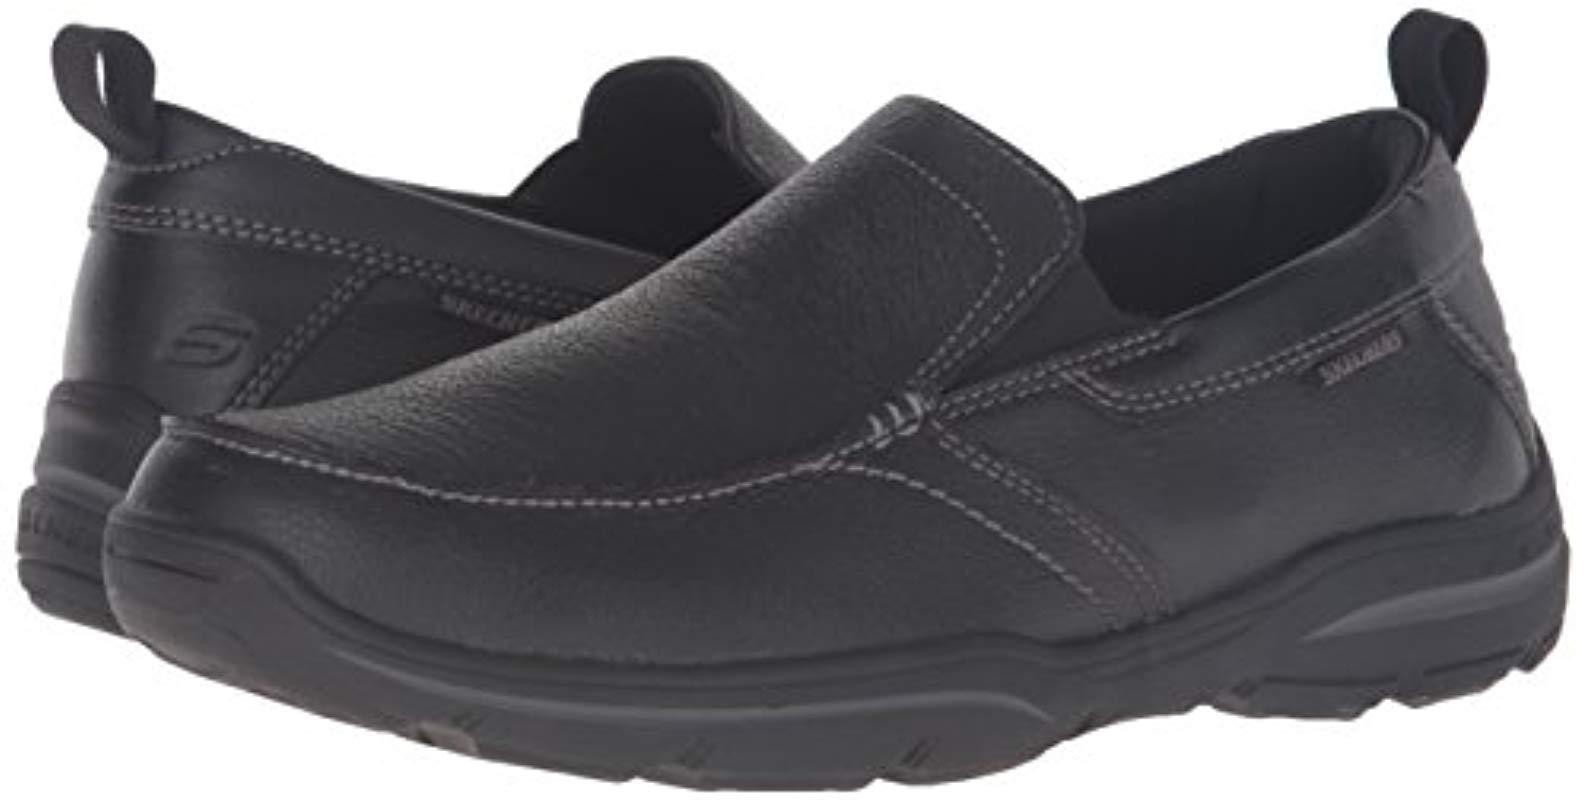 Skechers Canvas Relaxed Fit: Harper - Forde Slip-on Loafer in Black ...